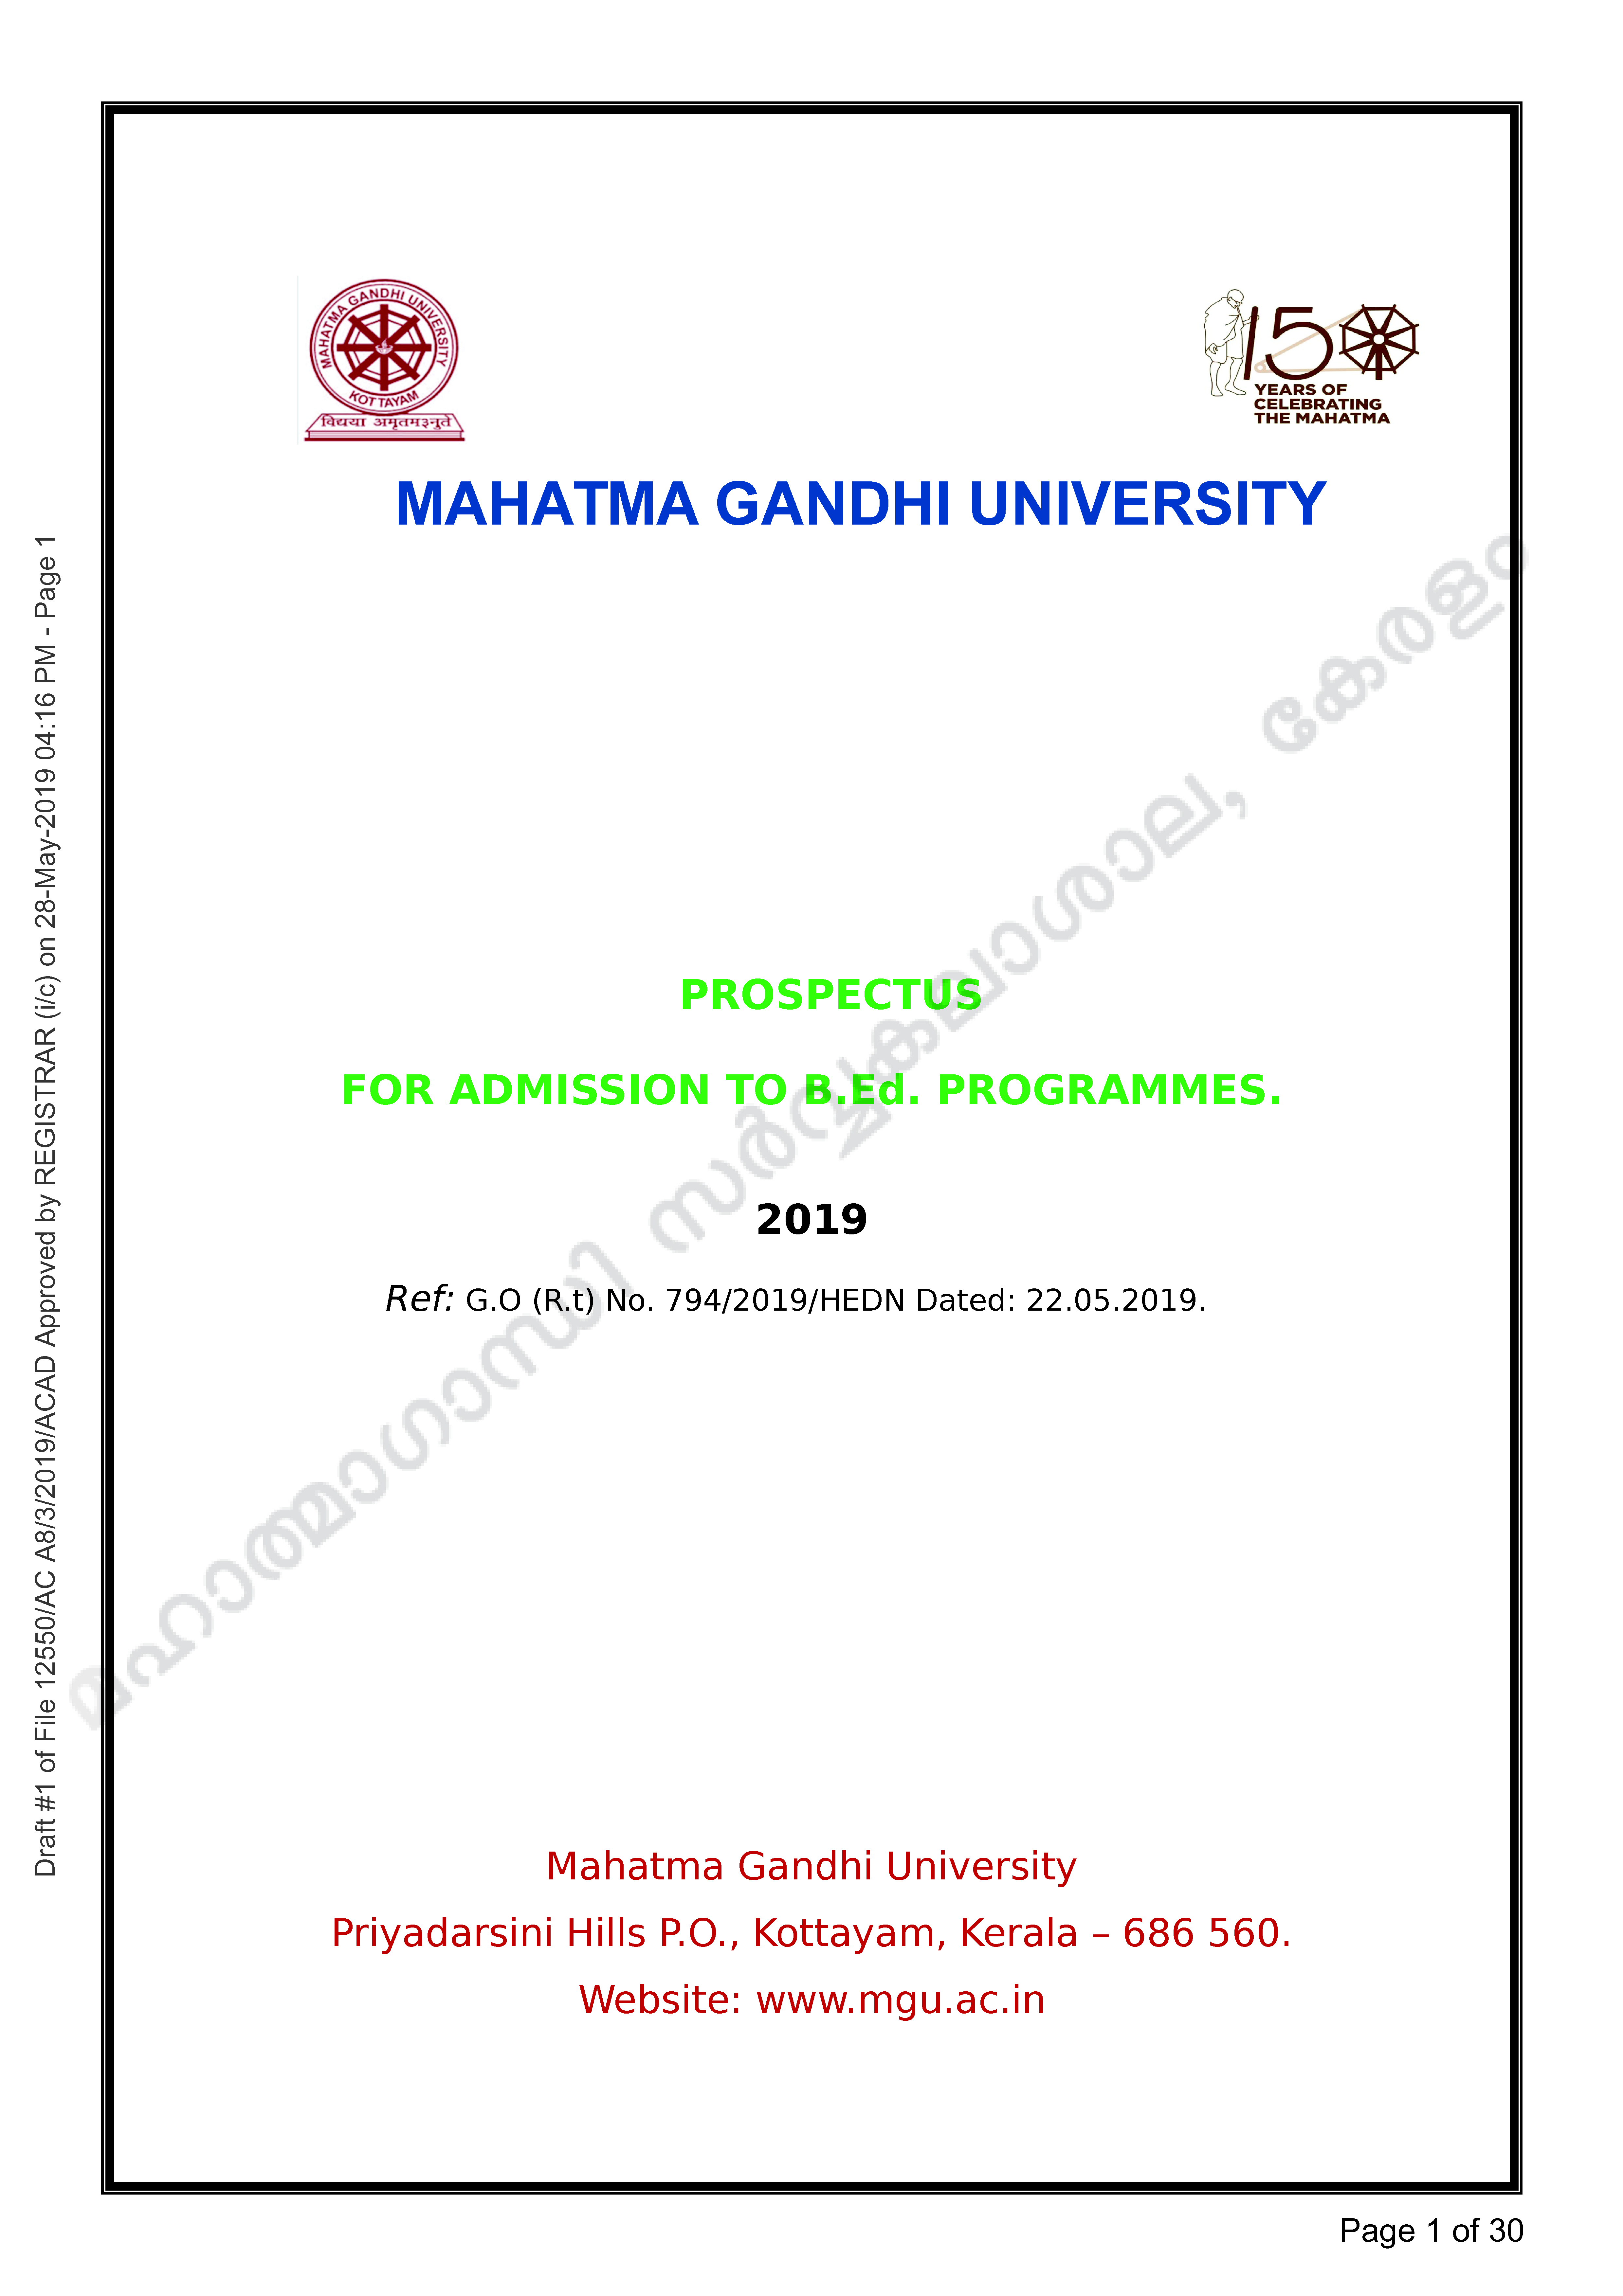 MG University B Ed Prospectus and Application form 2019 2020 - Notification Image 1